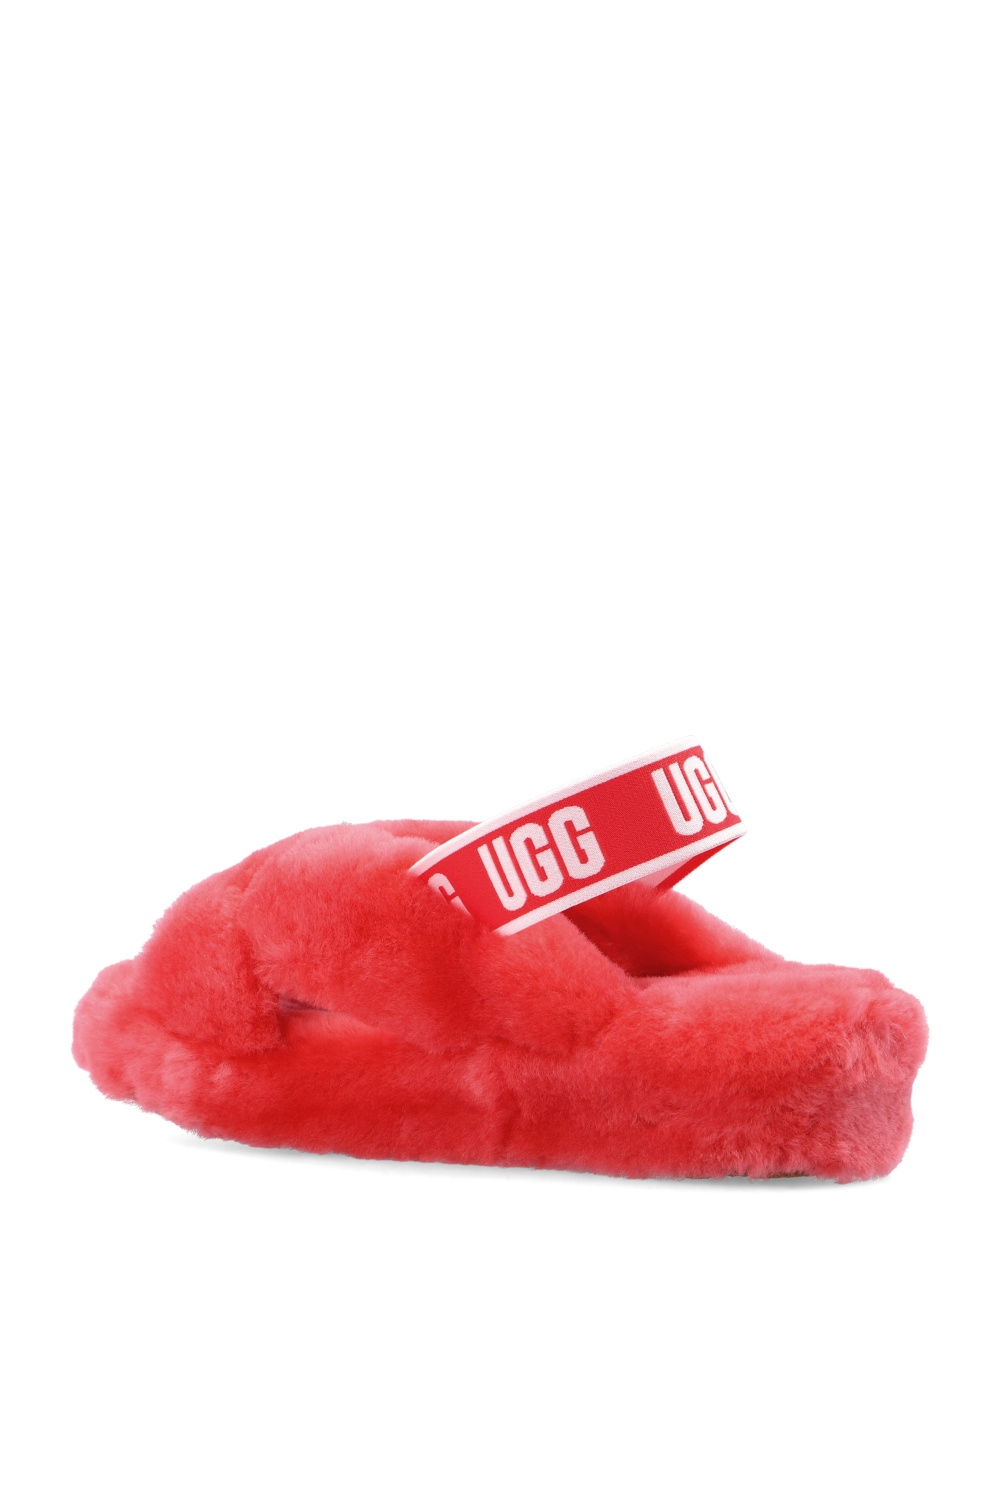 UGG ‘Fab Yeah’ sandals